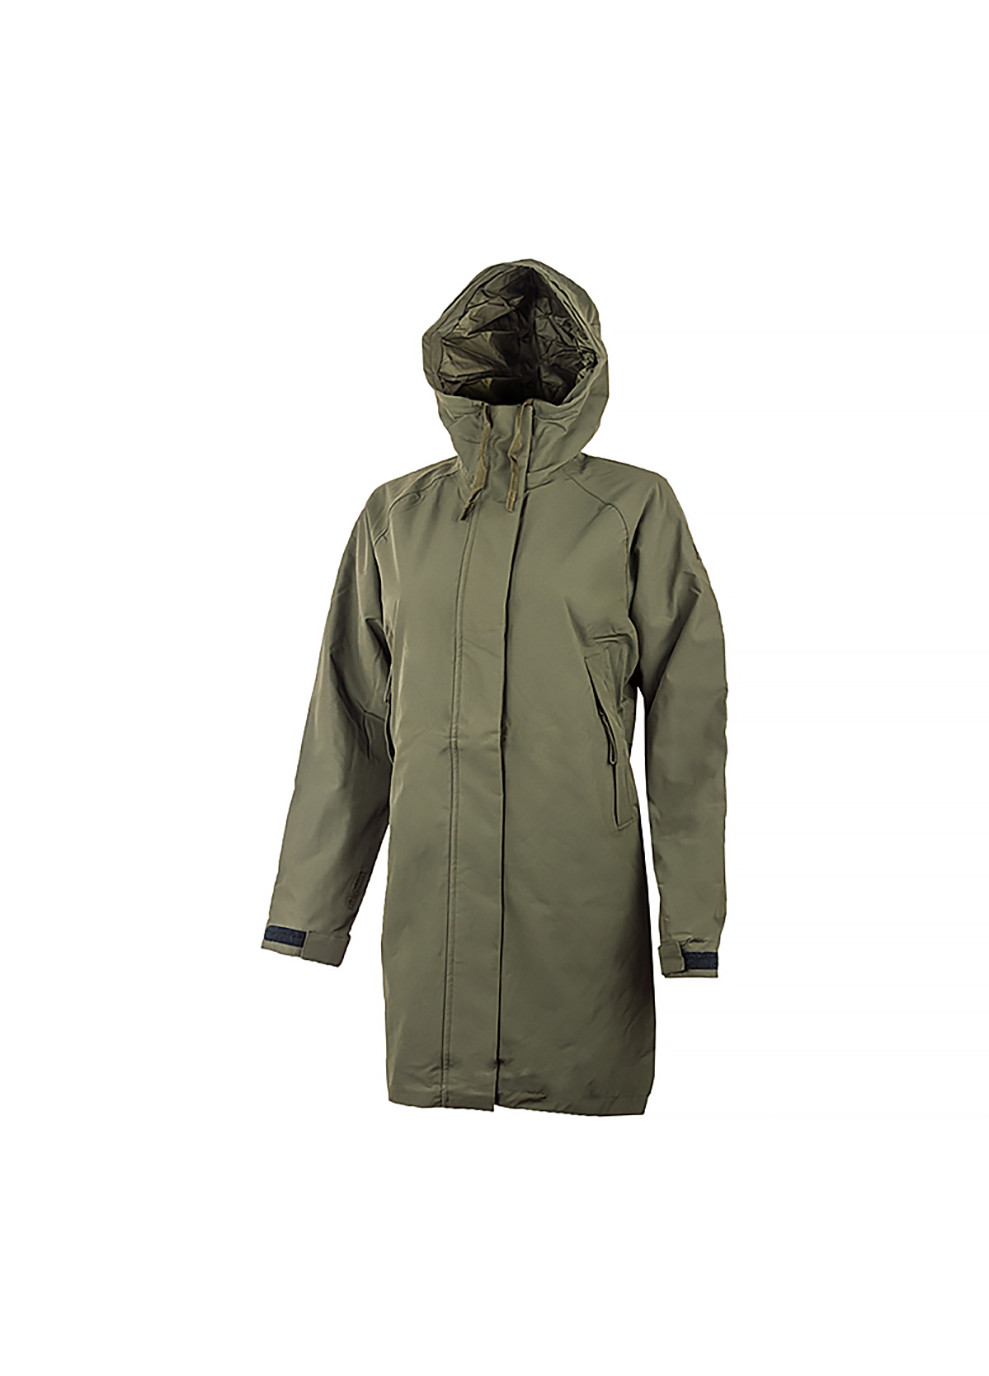 Оливковая (хаки) демисезонная женская куртка w mono material ins rain coat хаки Helly Hansen